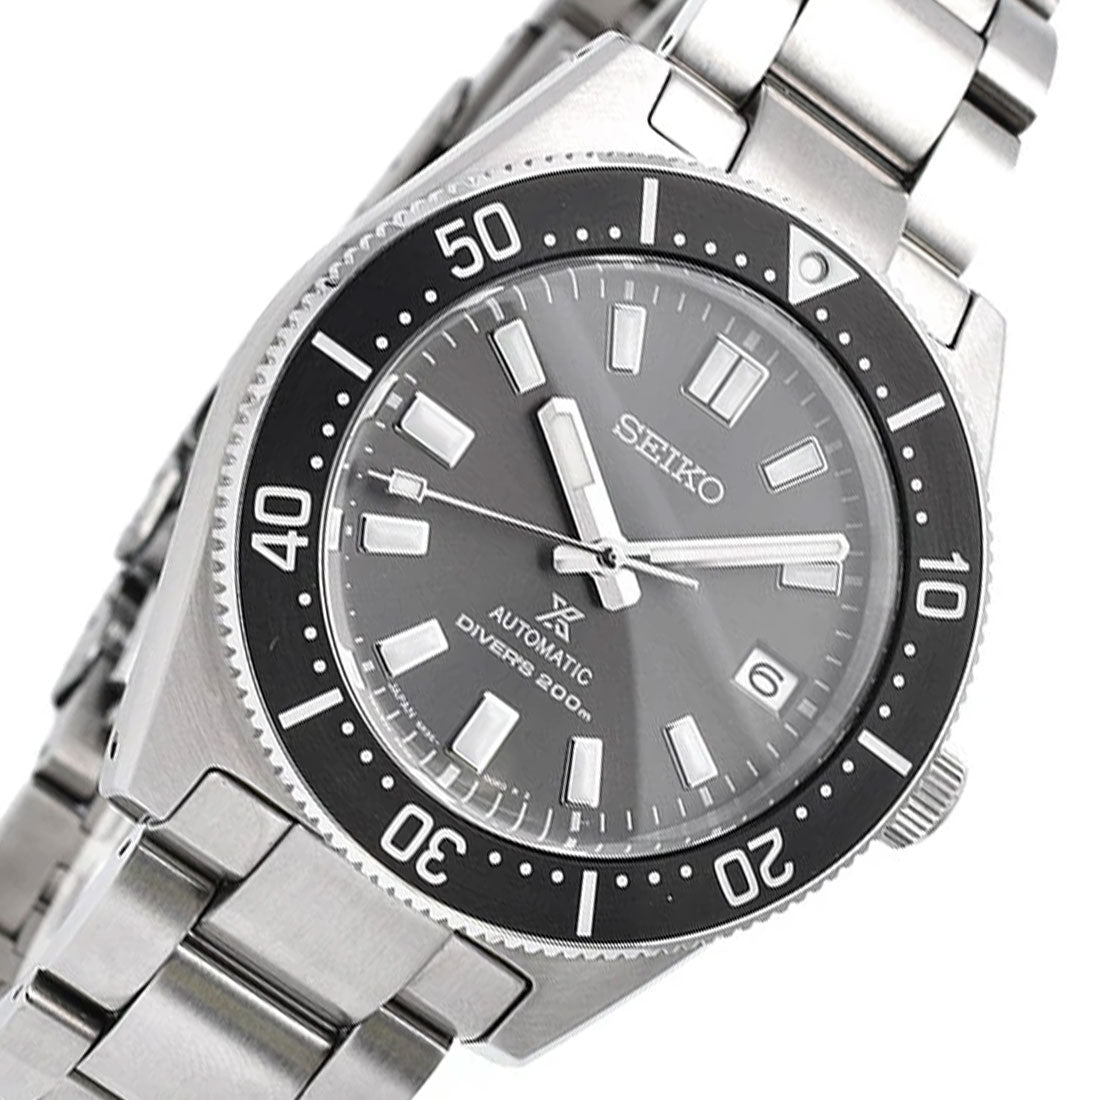 Seiko Prospex Automatic Diving JDM Watch SBDC101 -Seiko